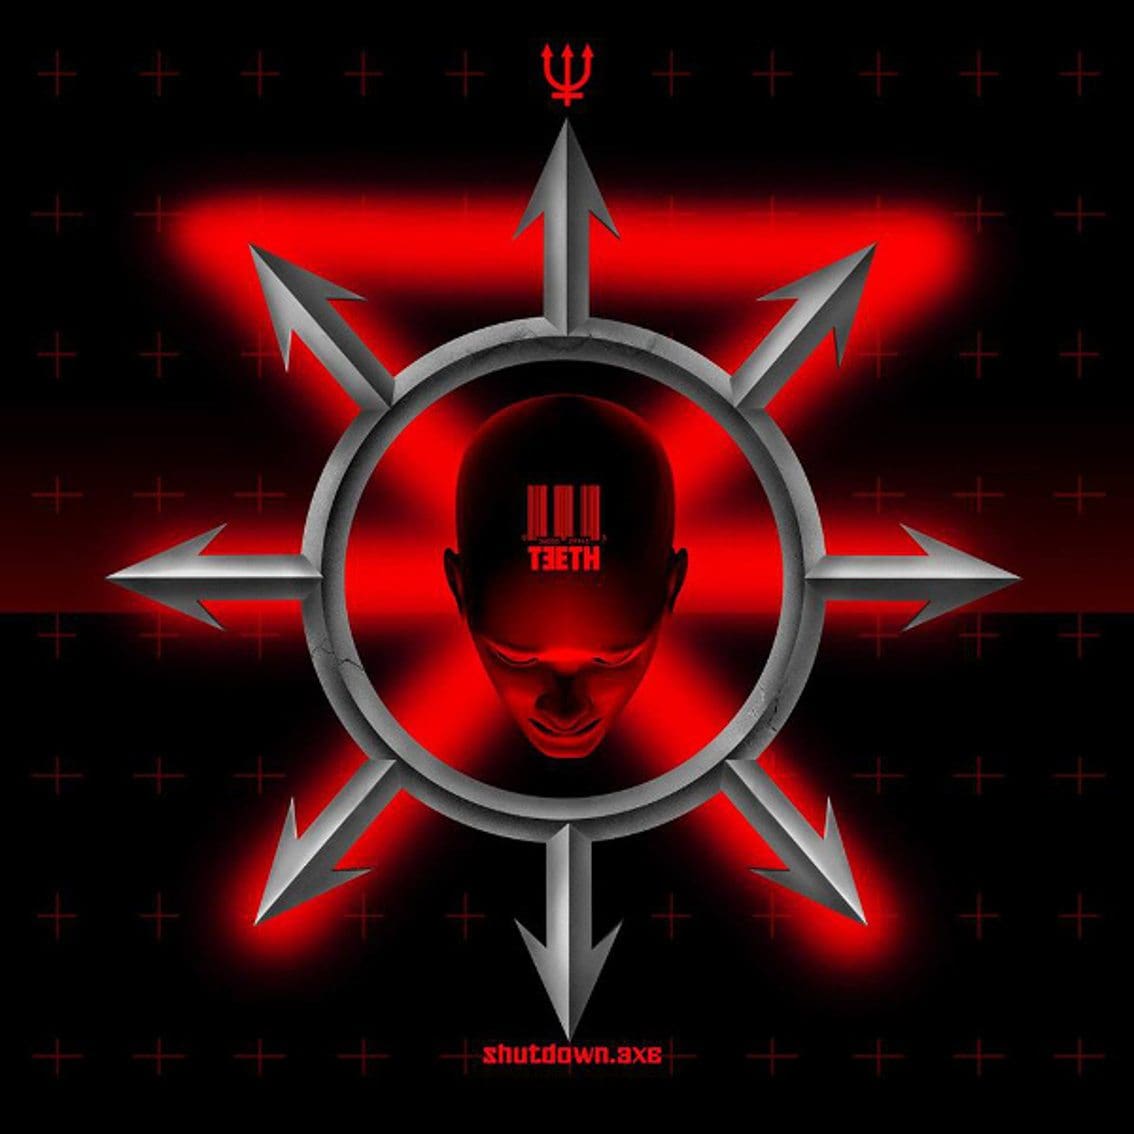 3TEETH announce new studio album 'Shutdown.exe' - pre-order the vinyl/CD right now